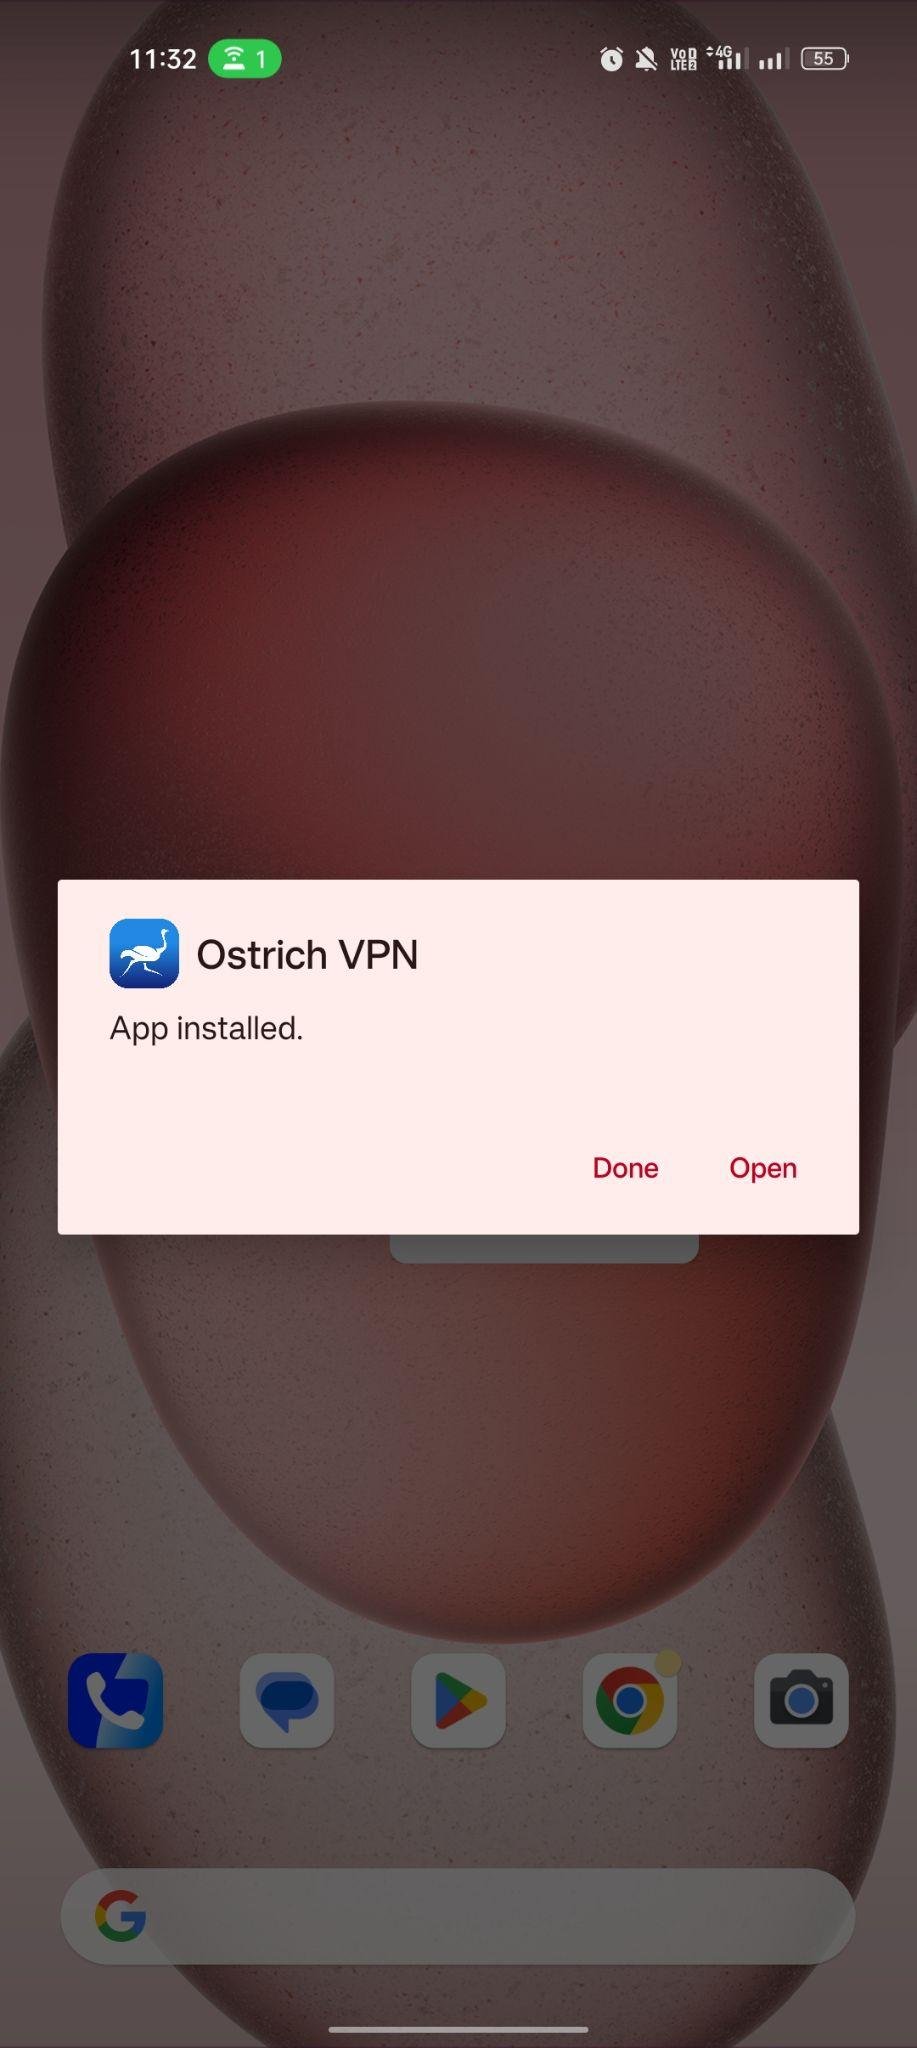 Ostrict VPN apk installed